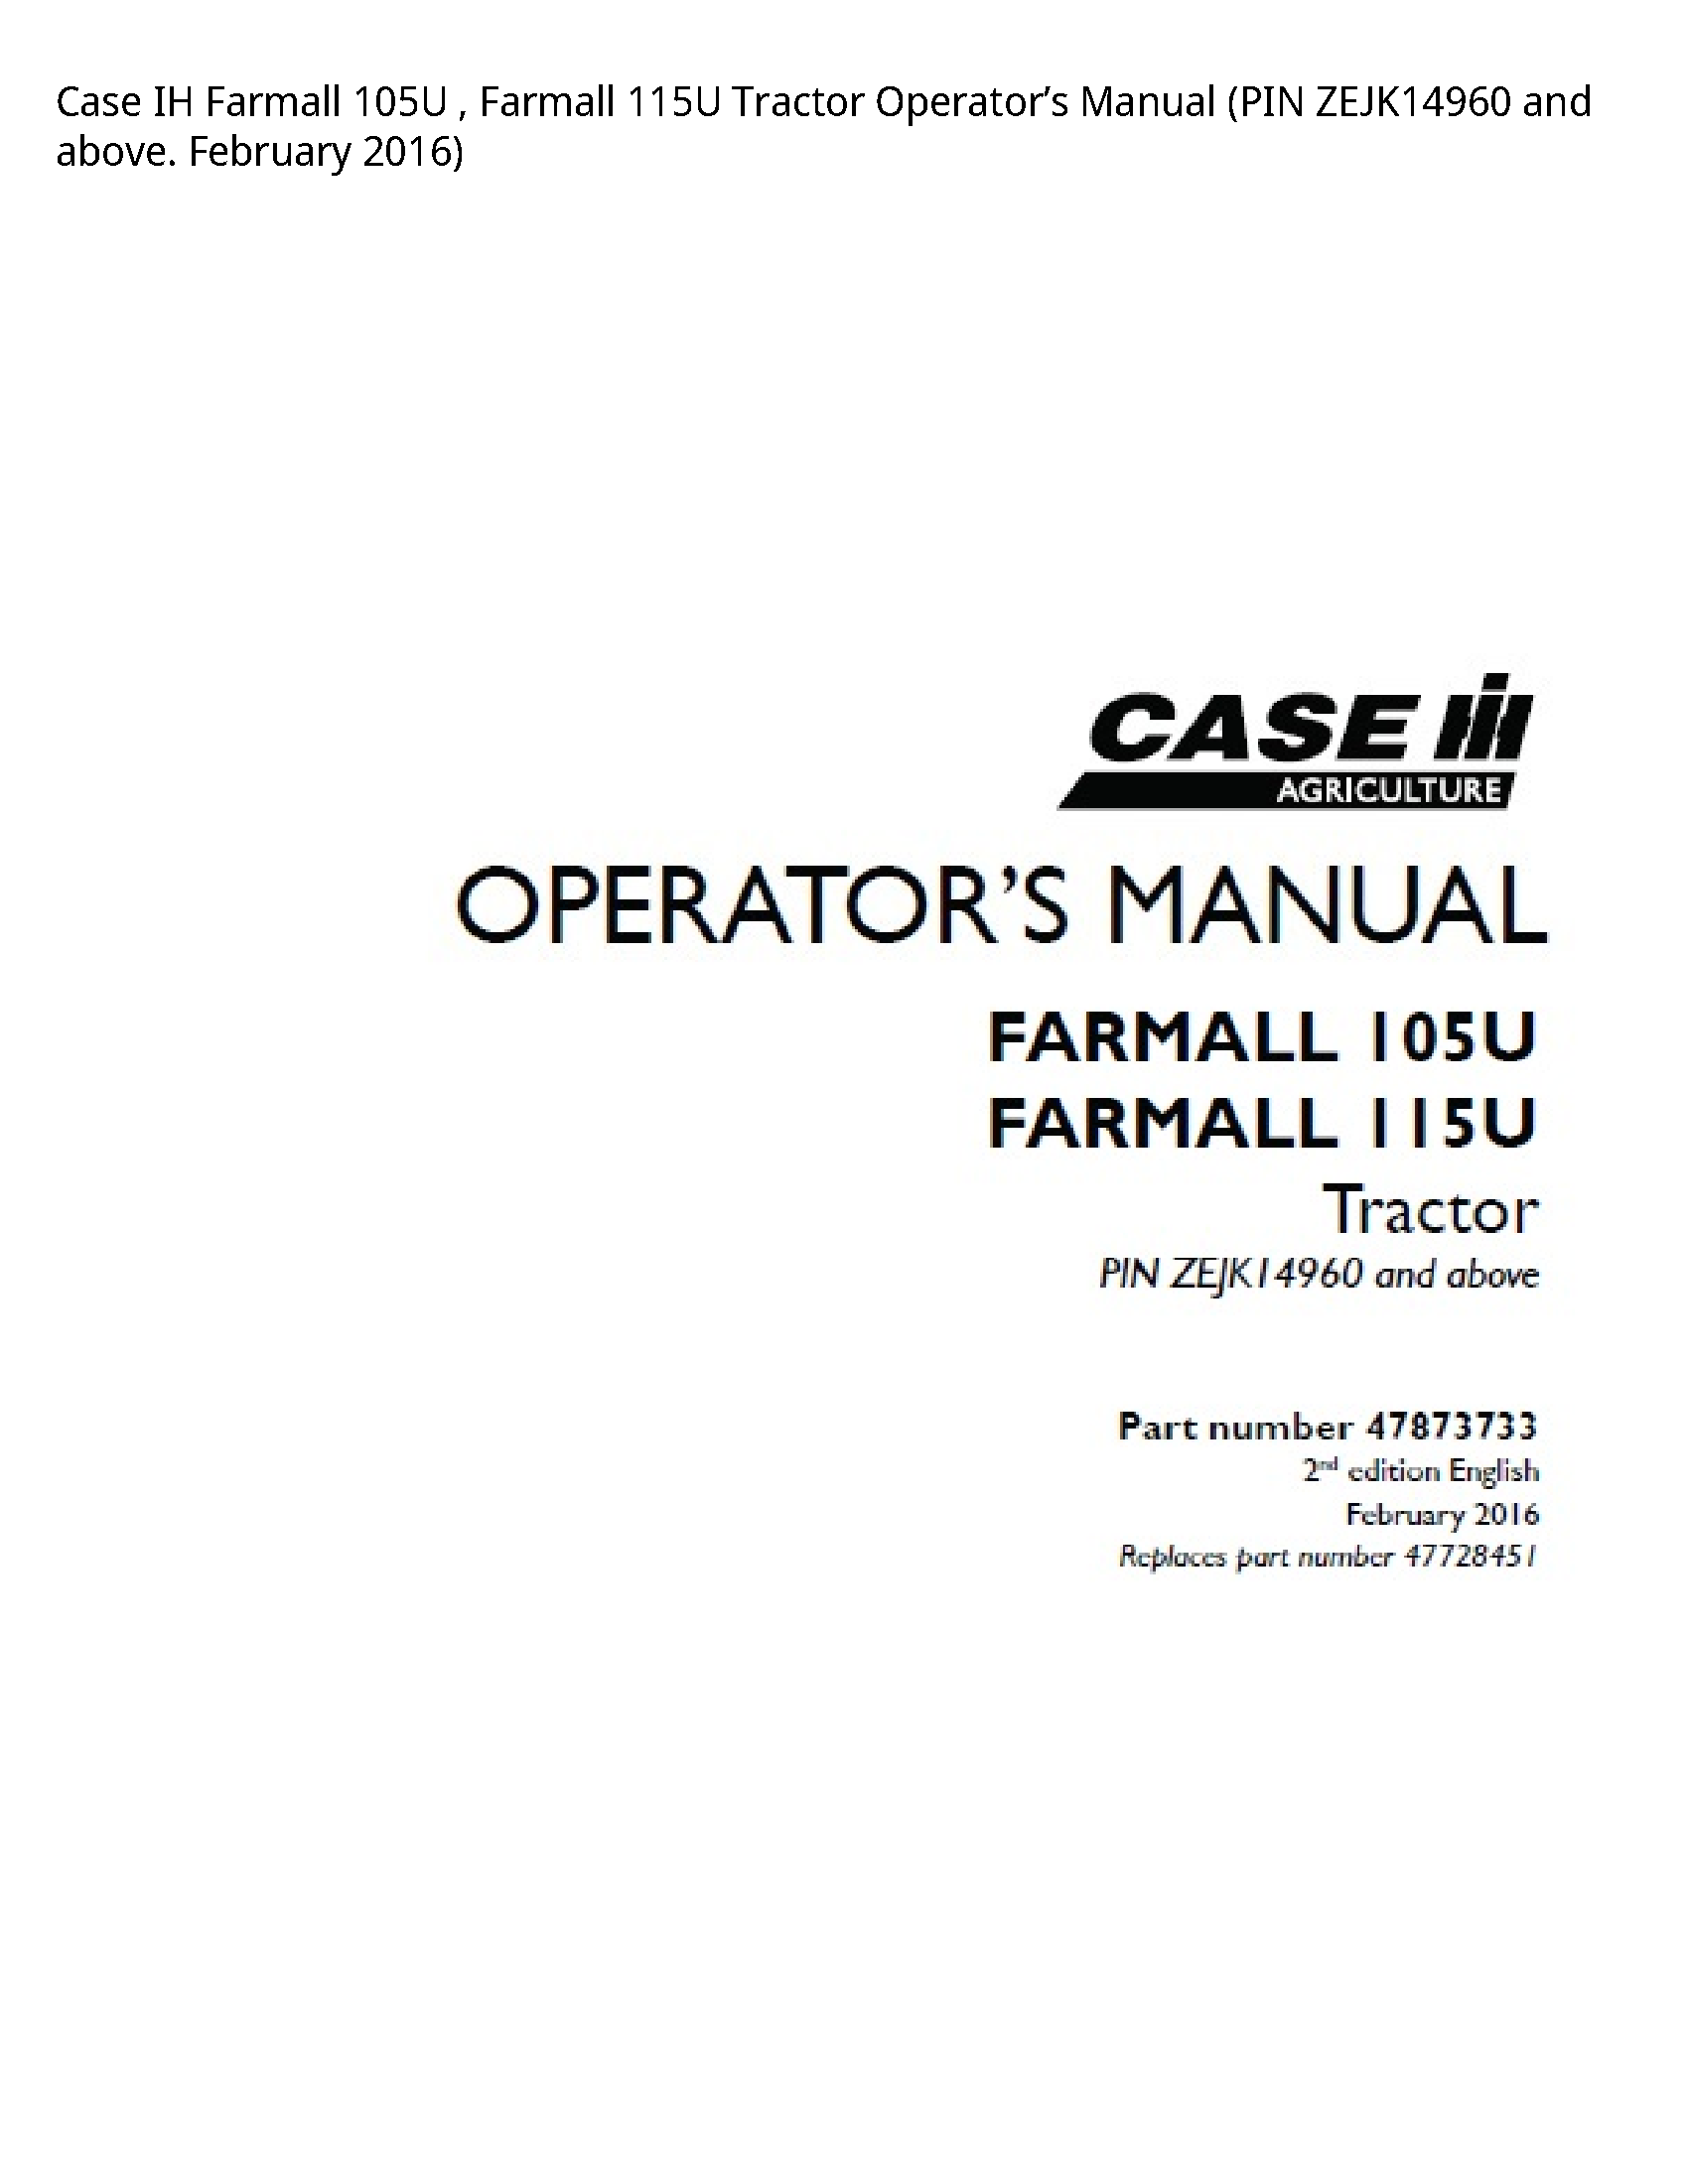 Case/Case IH 105U IH Farmall Farmall Tractor Operator’s manual